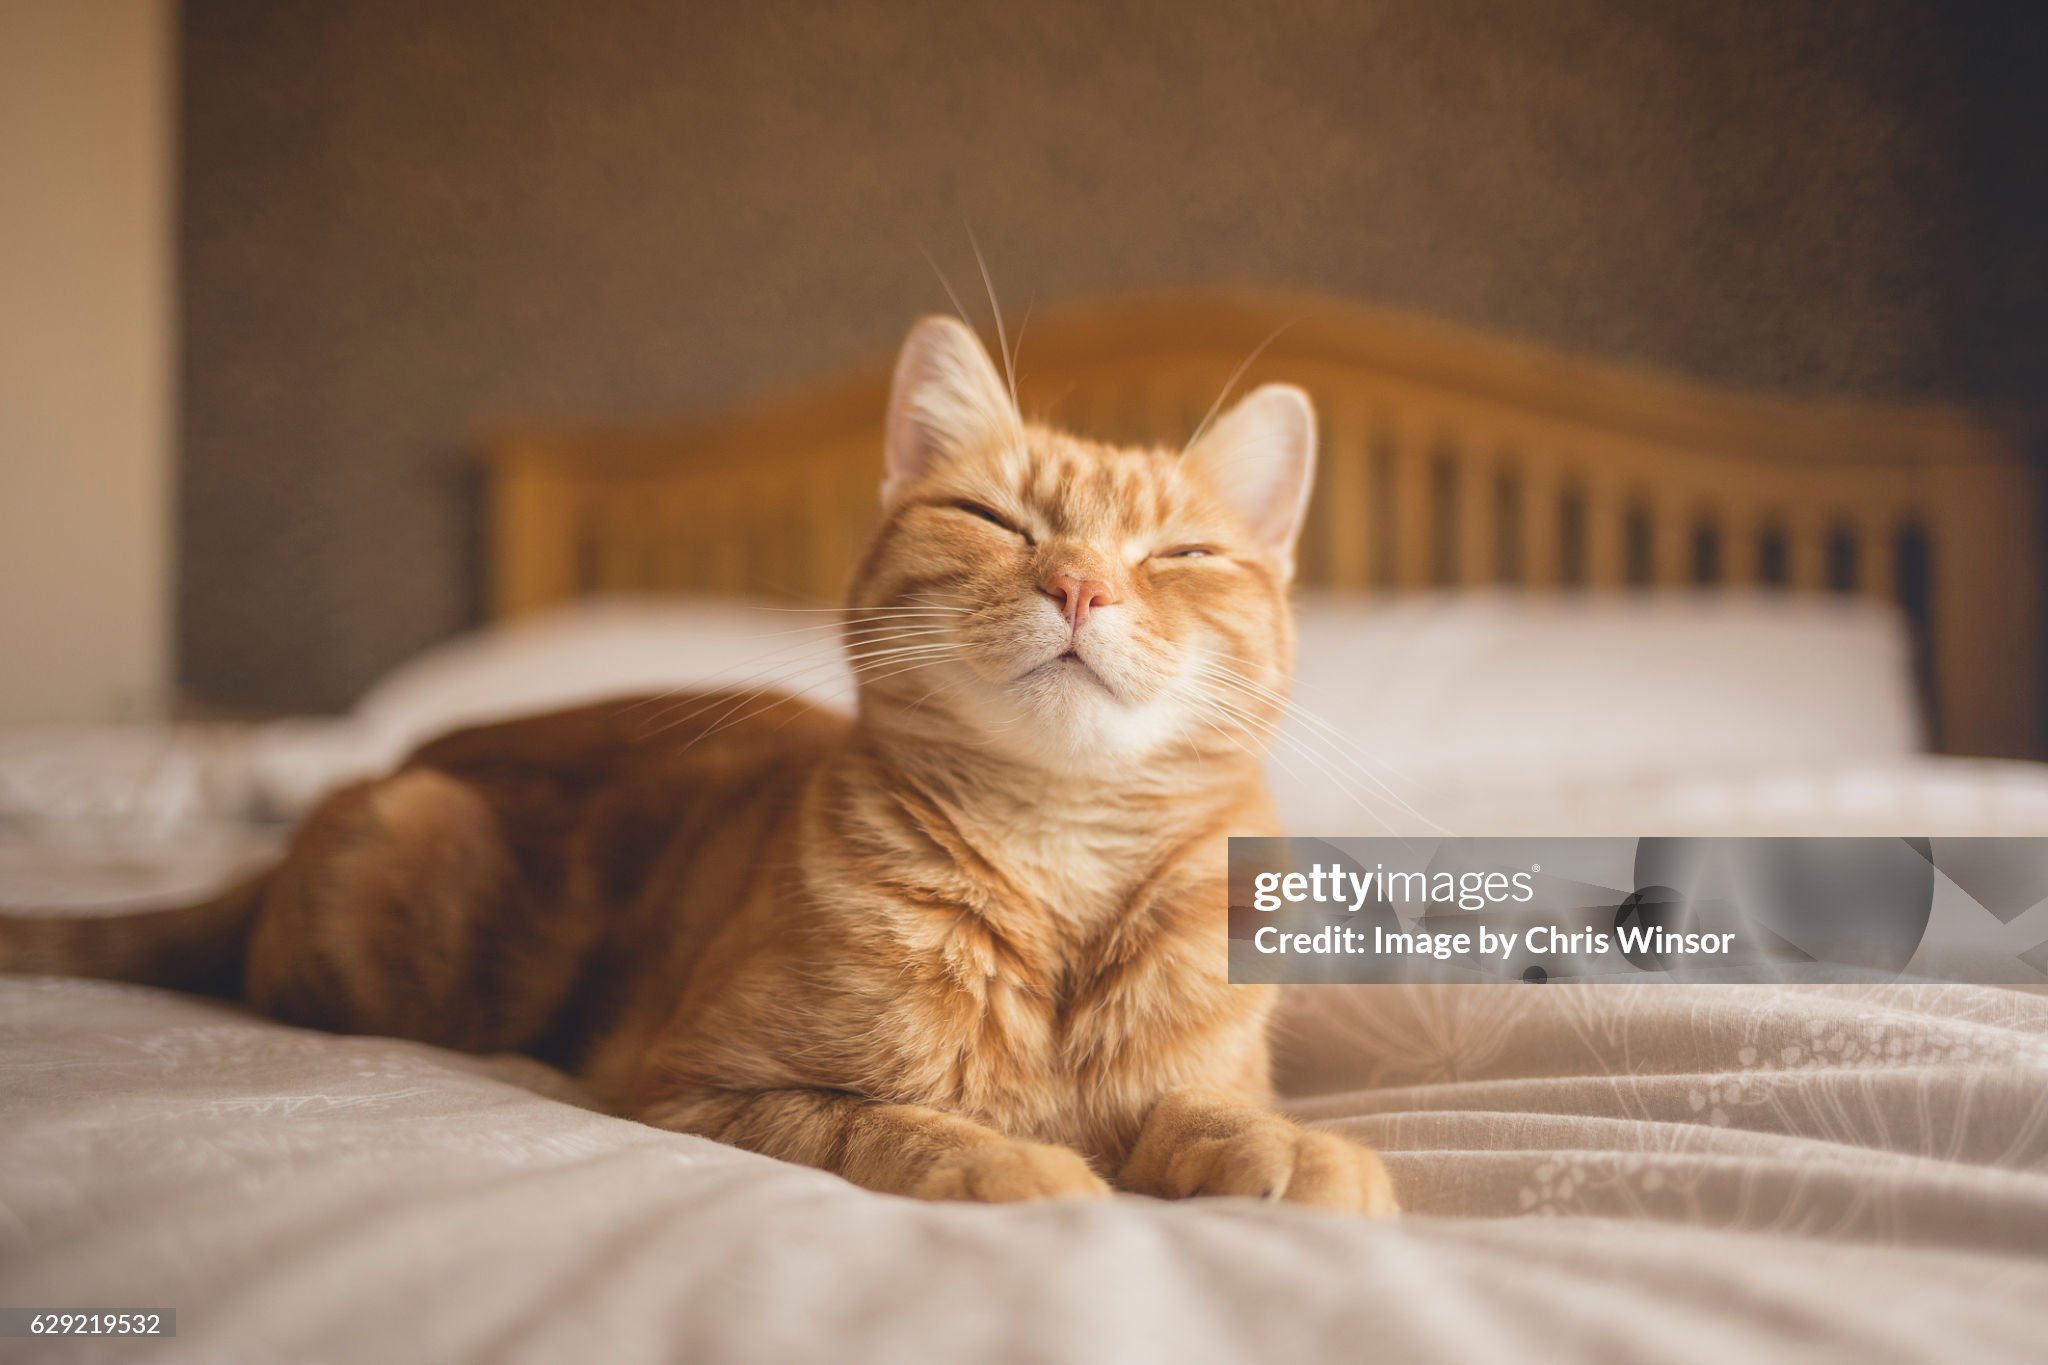 cat-on-bed.jpg